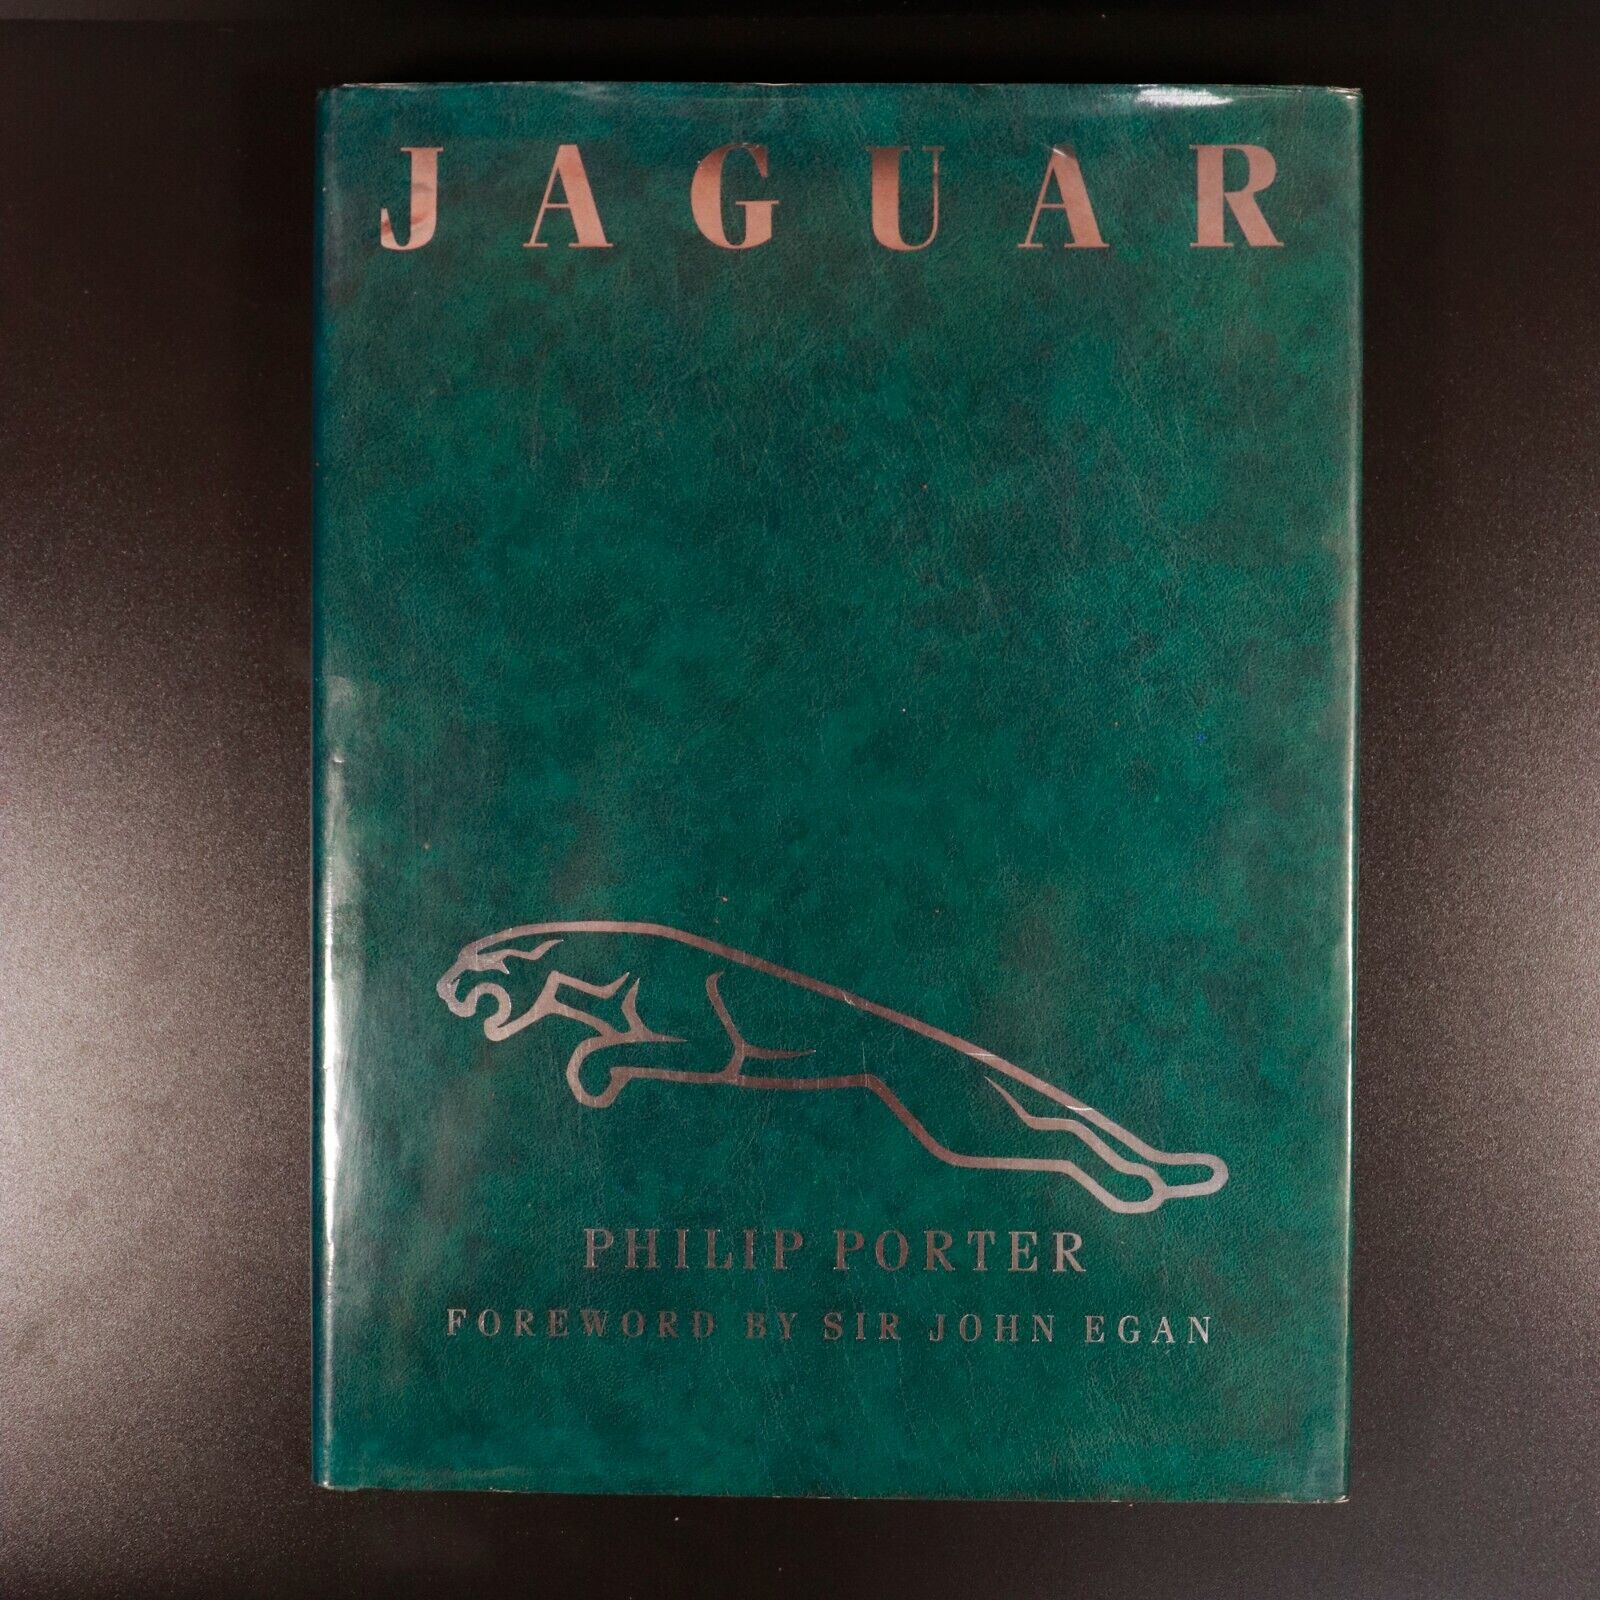 1989 Jaguar: History Of A Classic Marque by Philip Porter Automotive Book